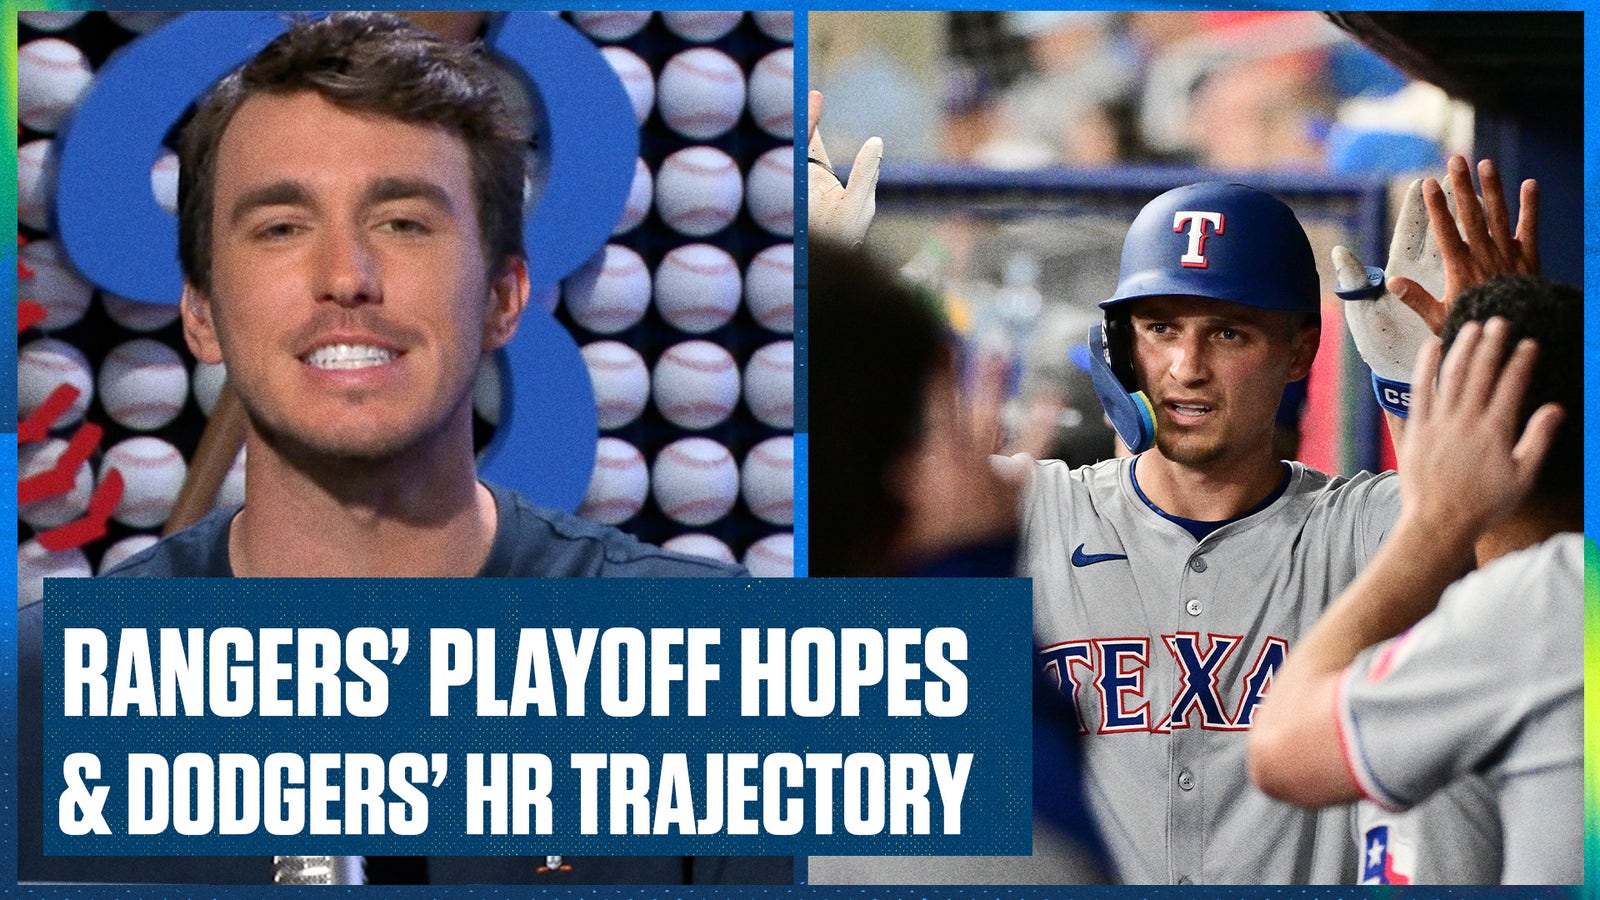 Will Dodgers break single season HR record? Will Rangers make playoffs?